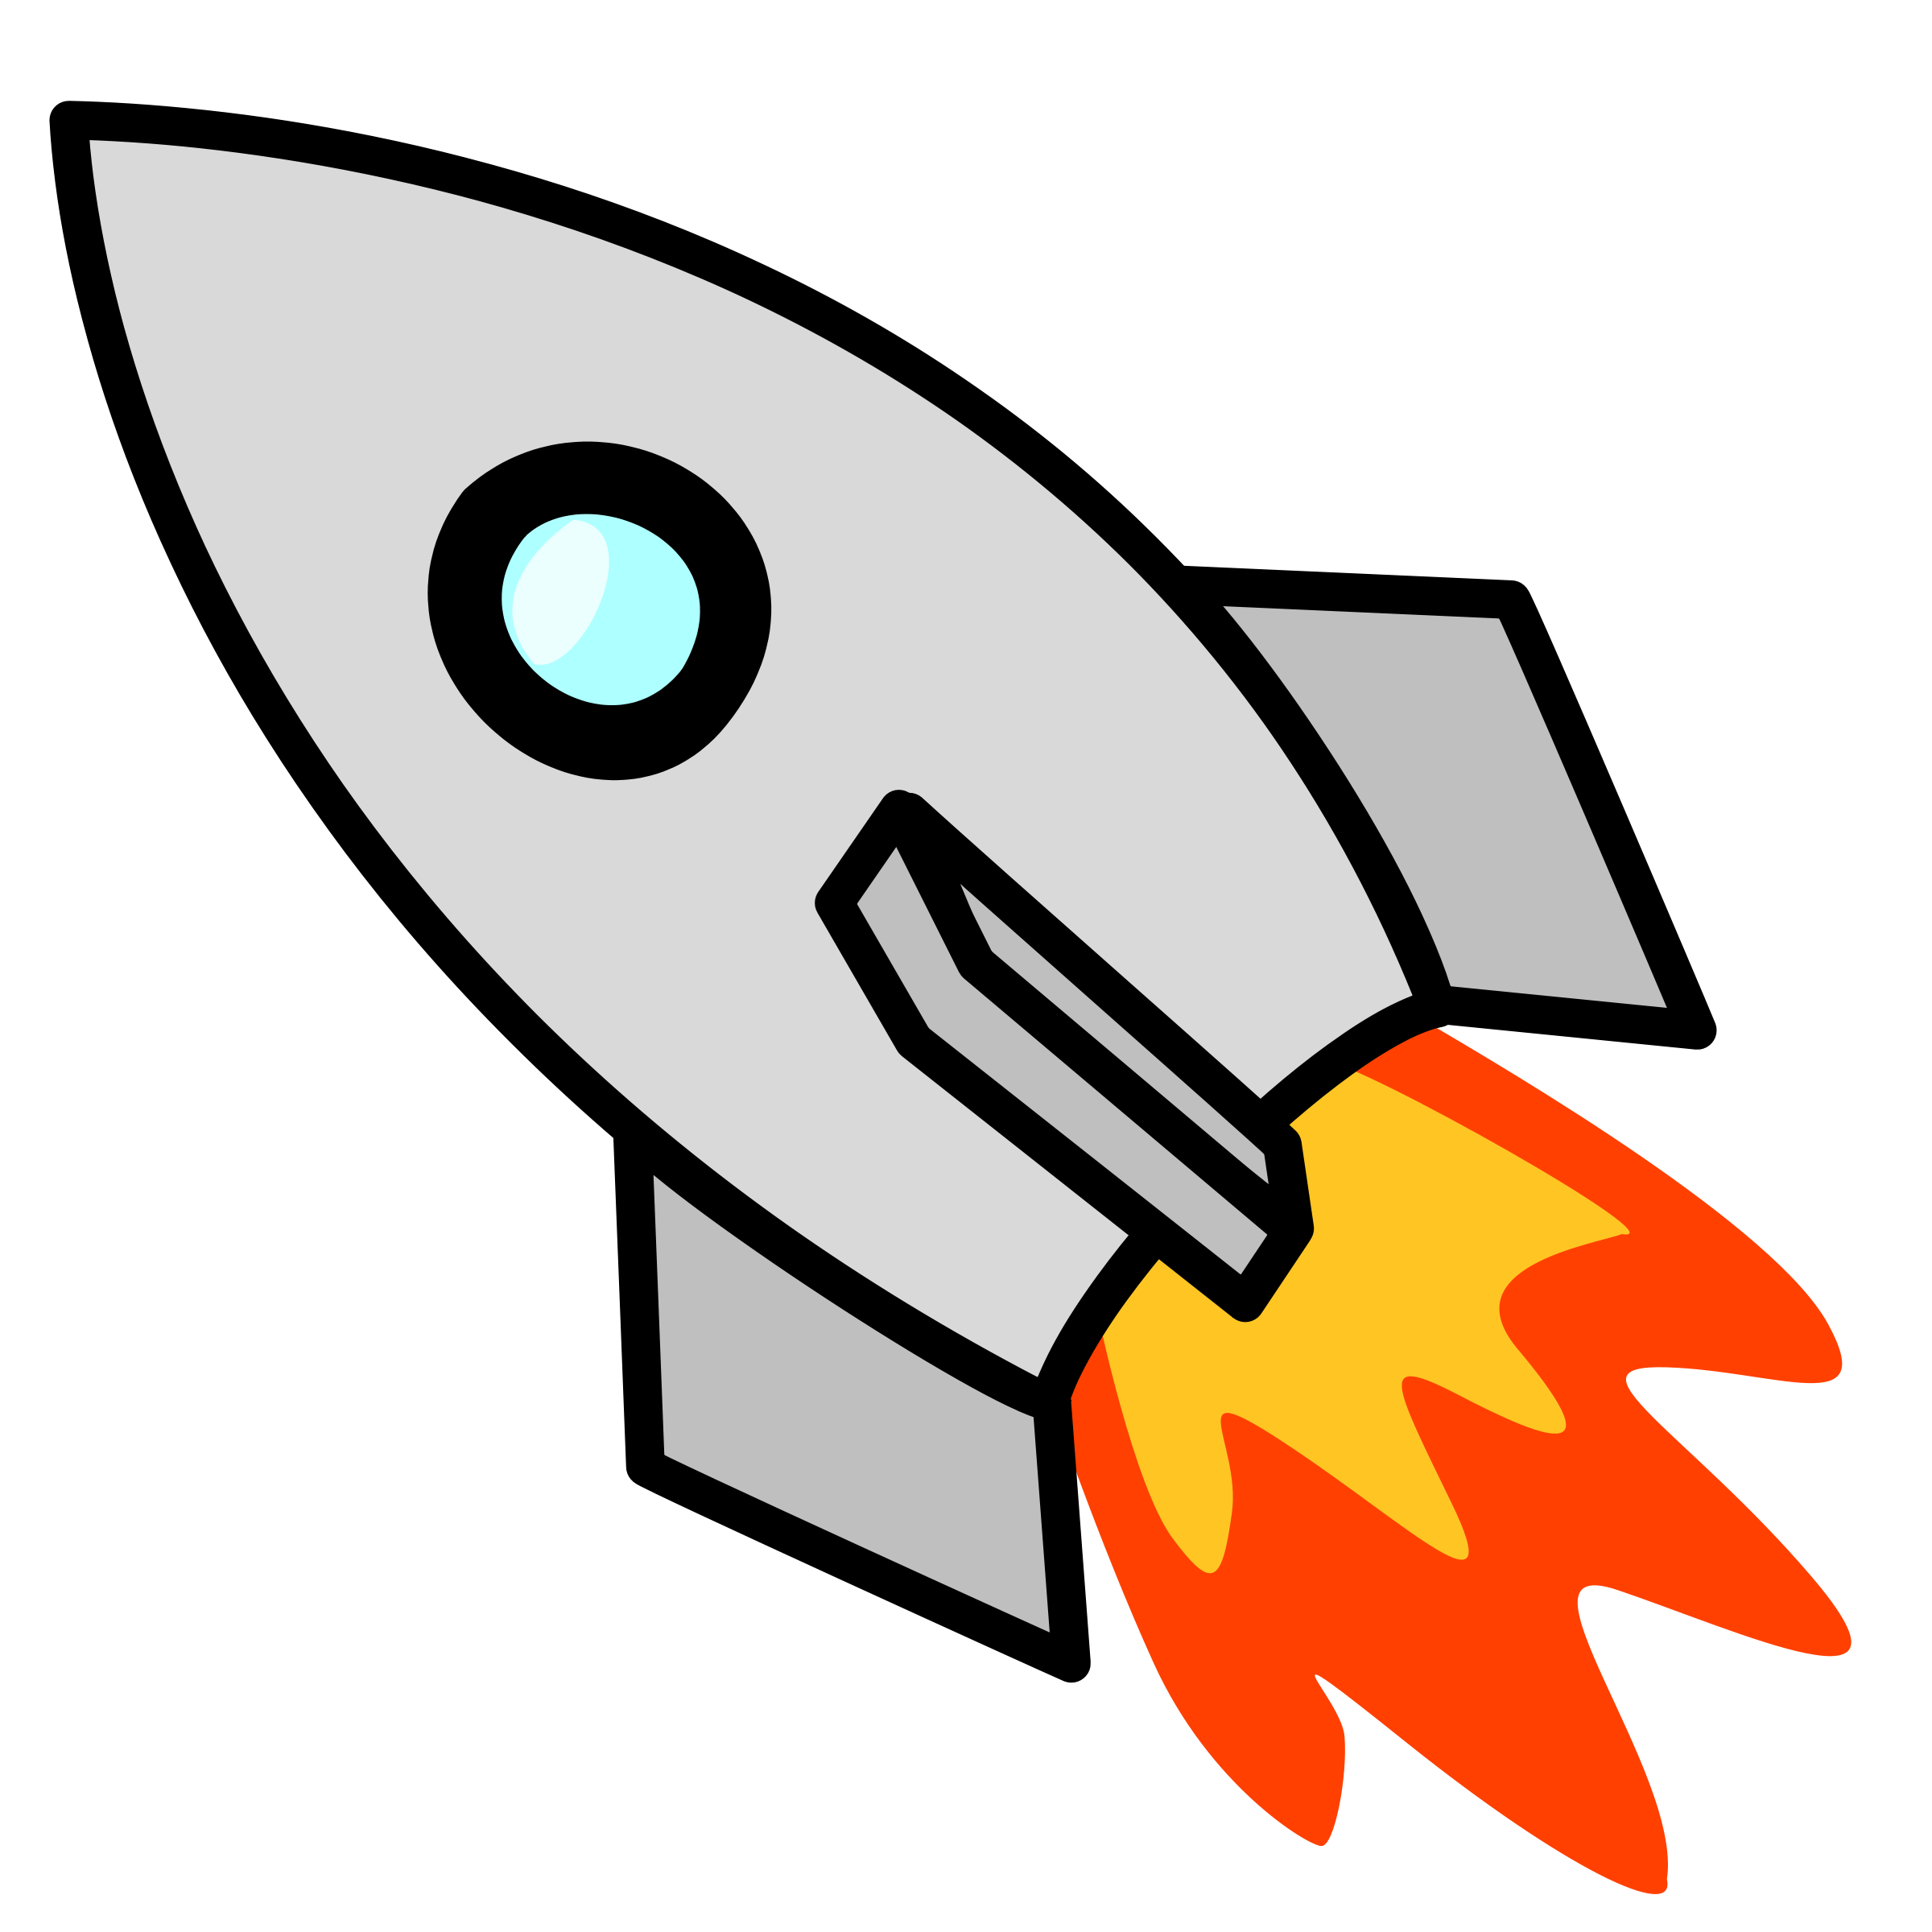 Cartoon Space Rocket - ClipArt Best